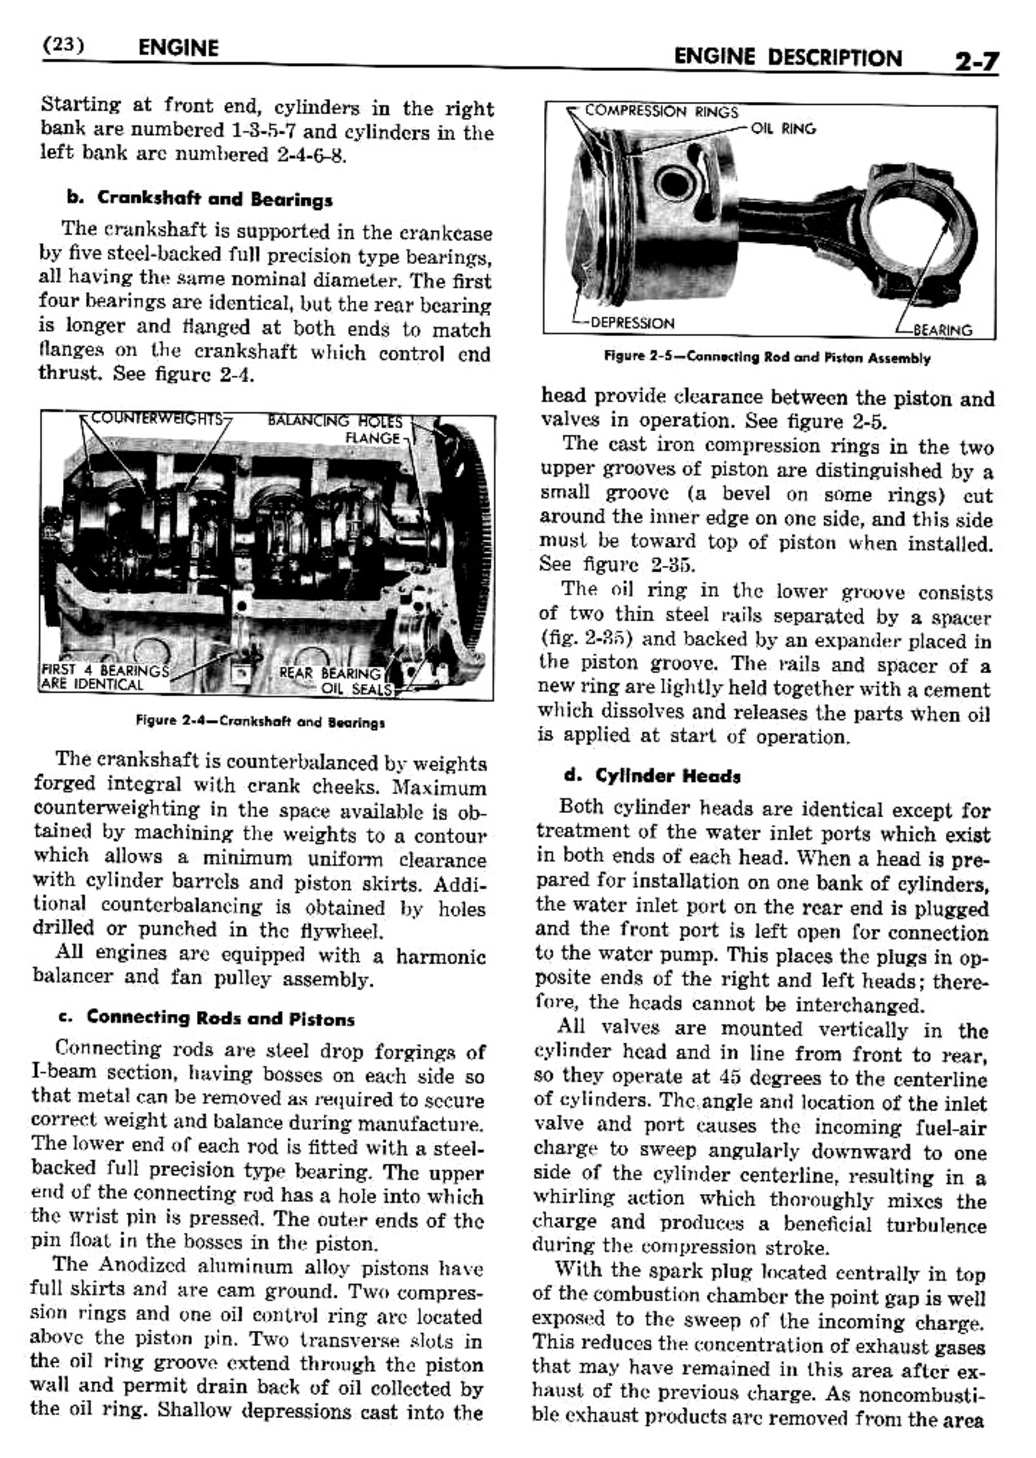 n_03 1956 Buick Shop Manual - Engine-007-007.jpg